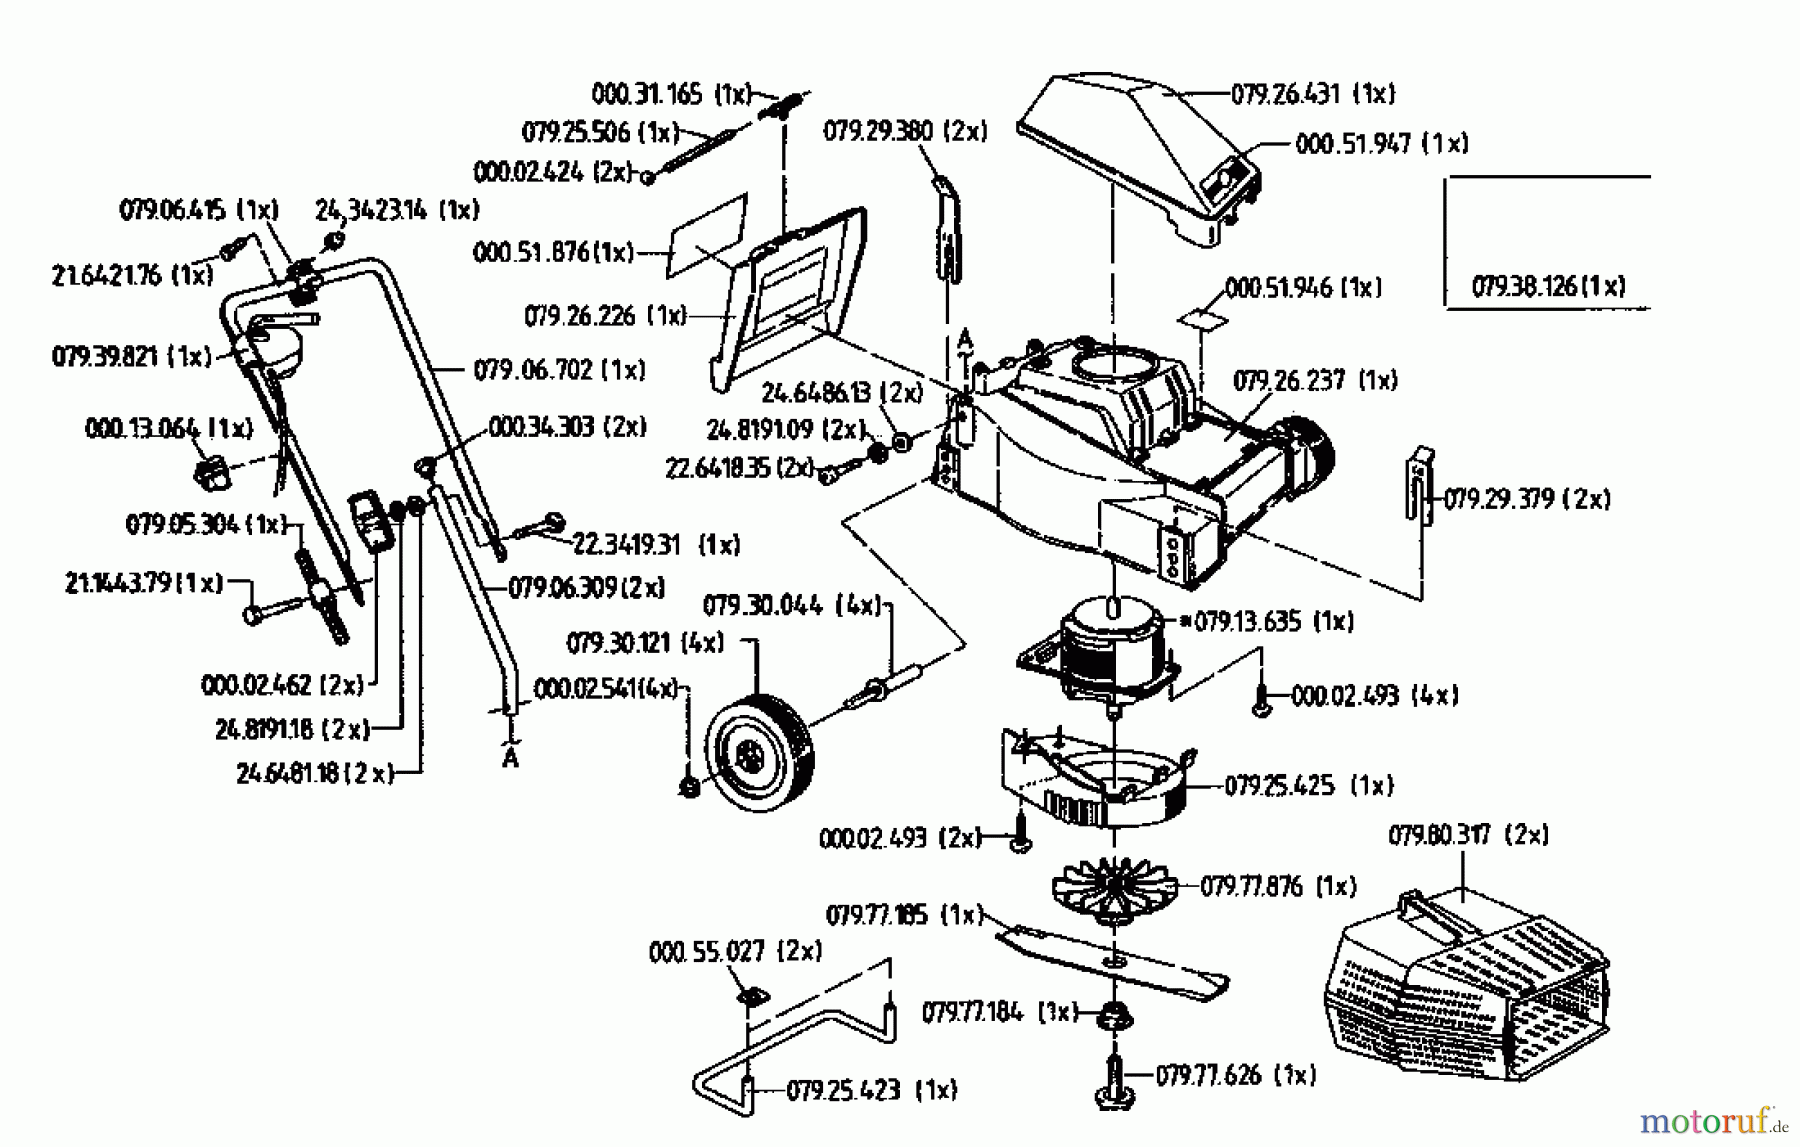  Esa Electric mower 900 04039.02  (1995) Basic machine